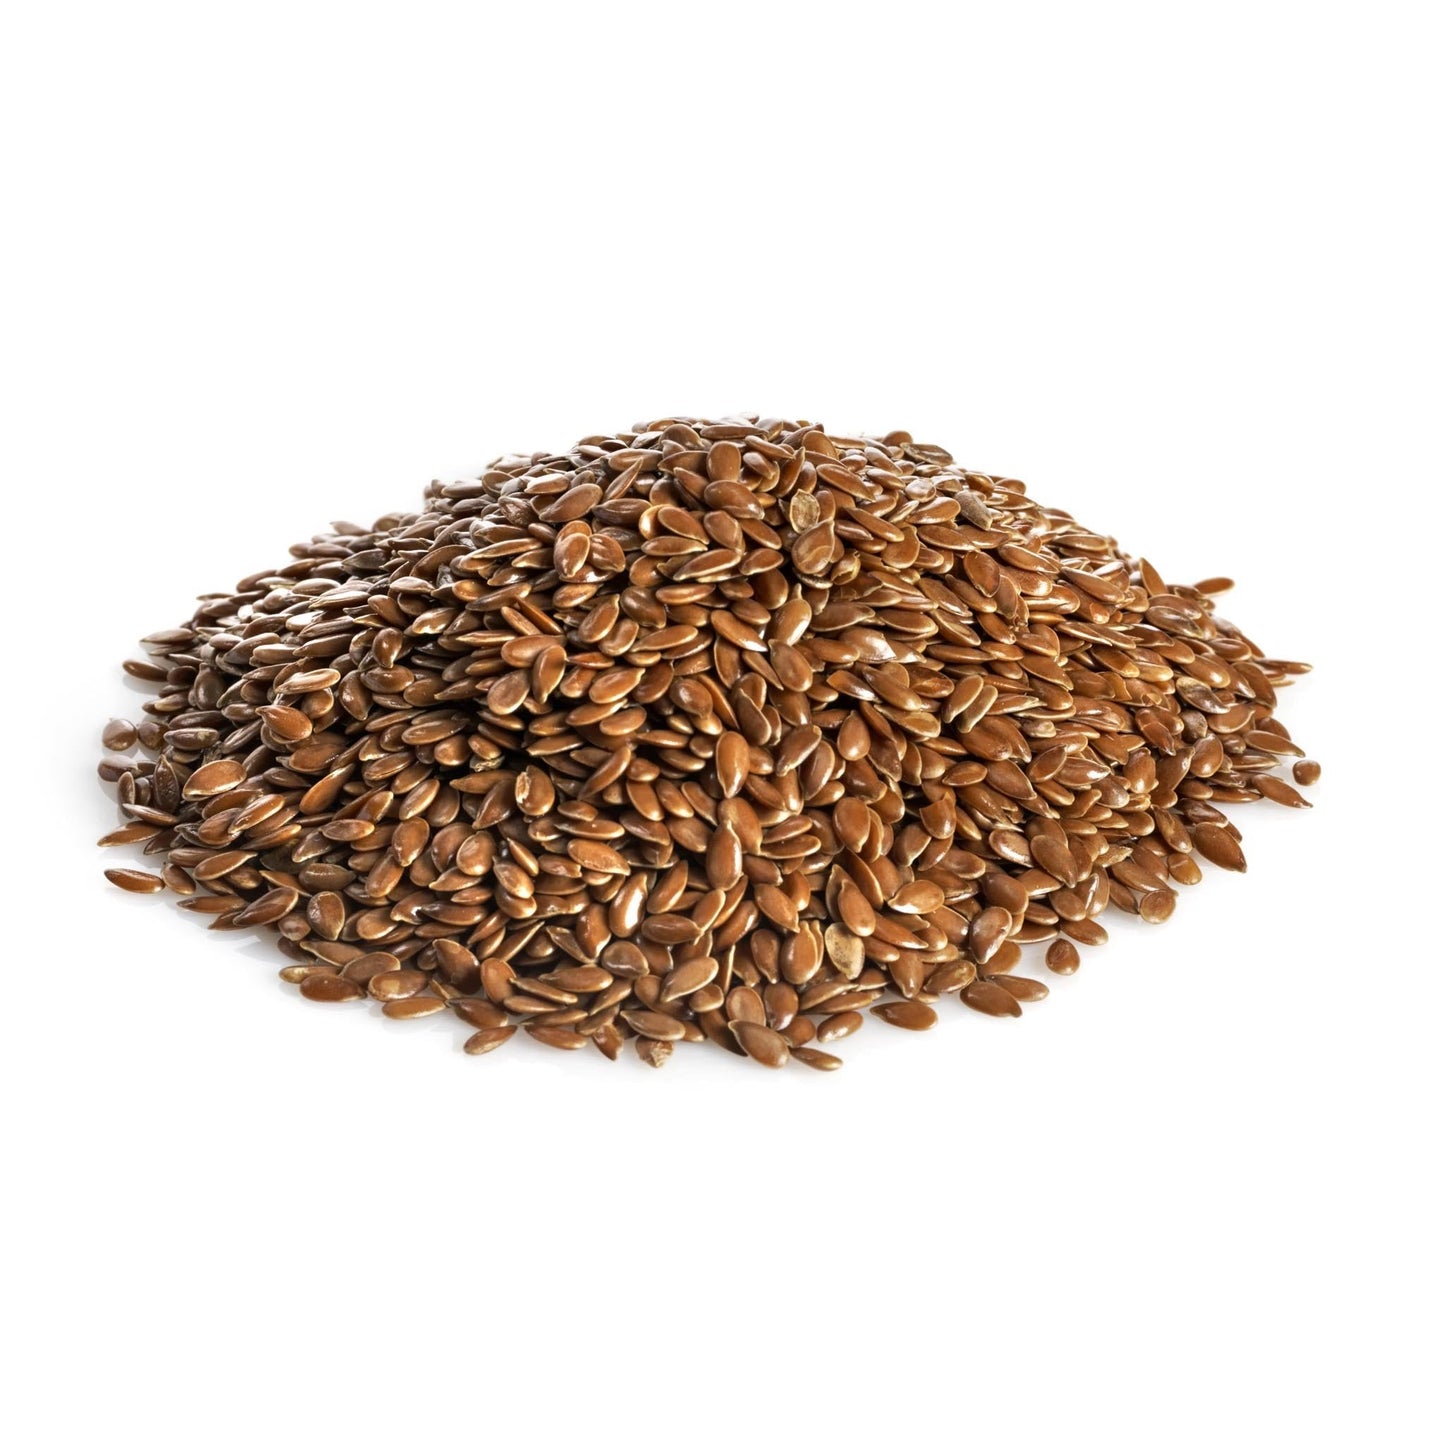 Flax Seed - 50lbs.